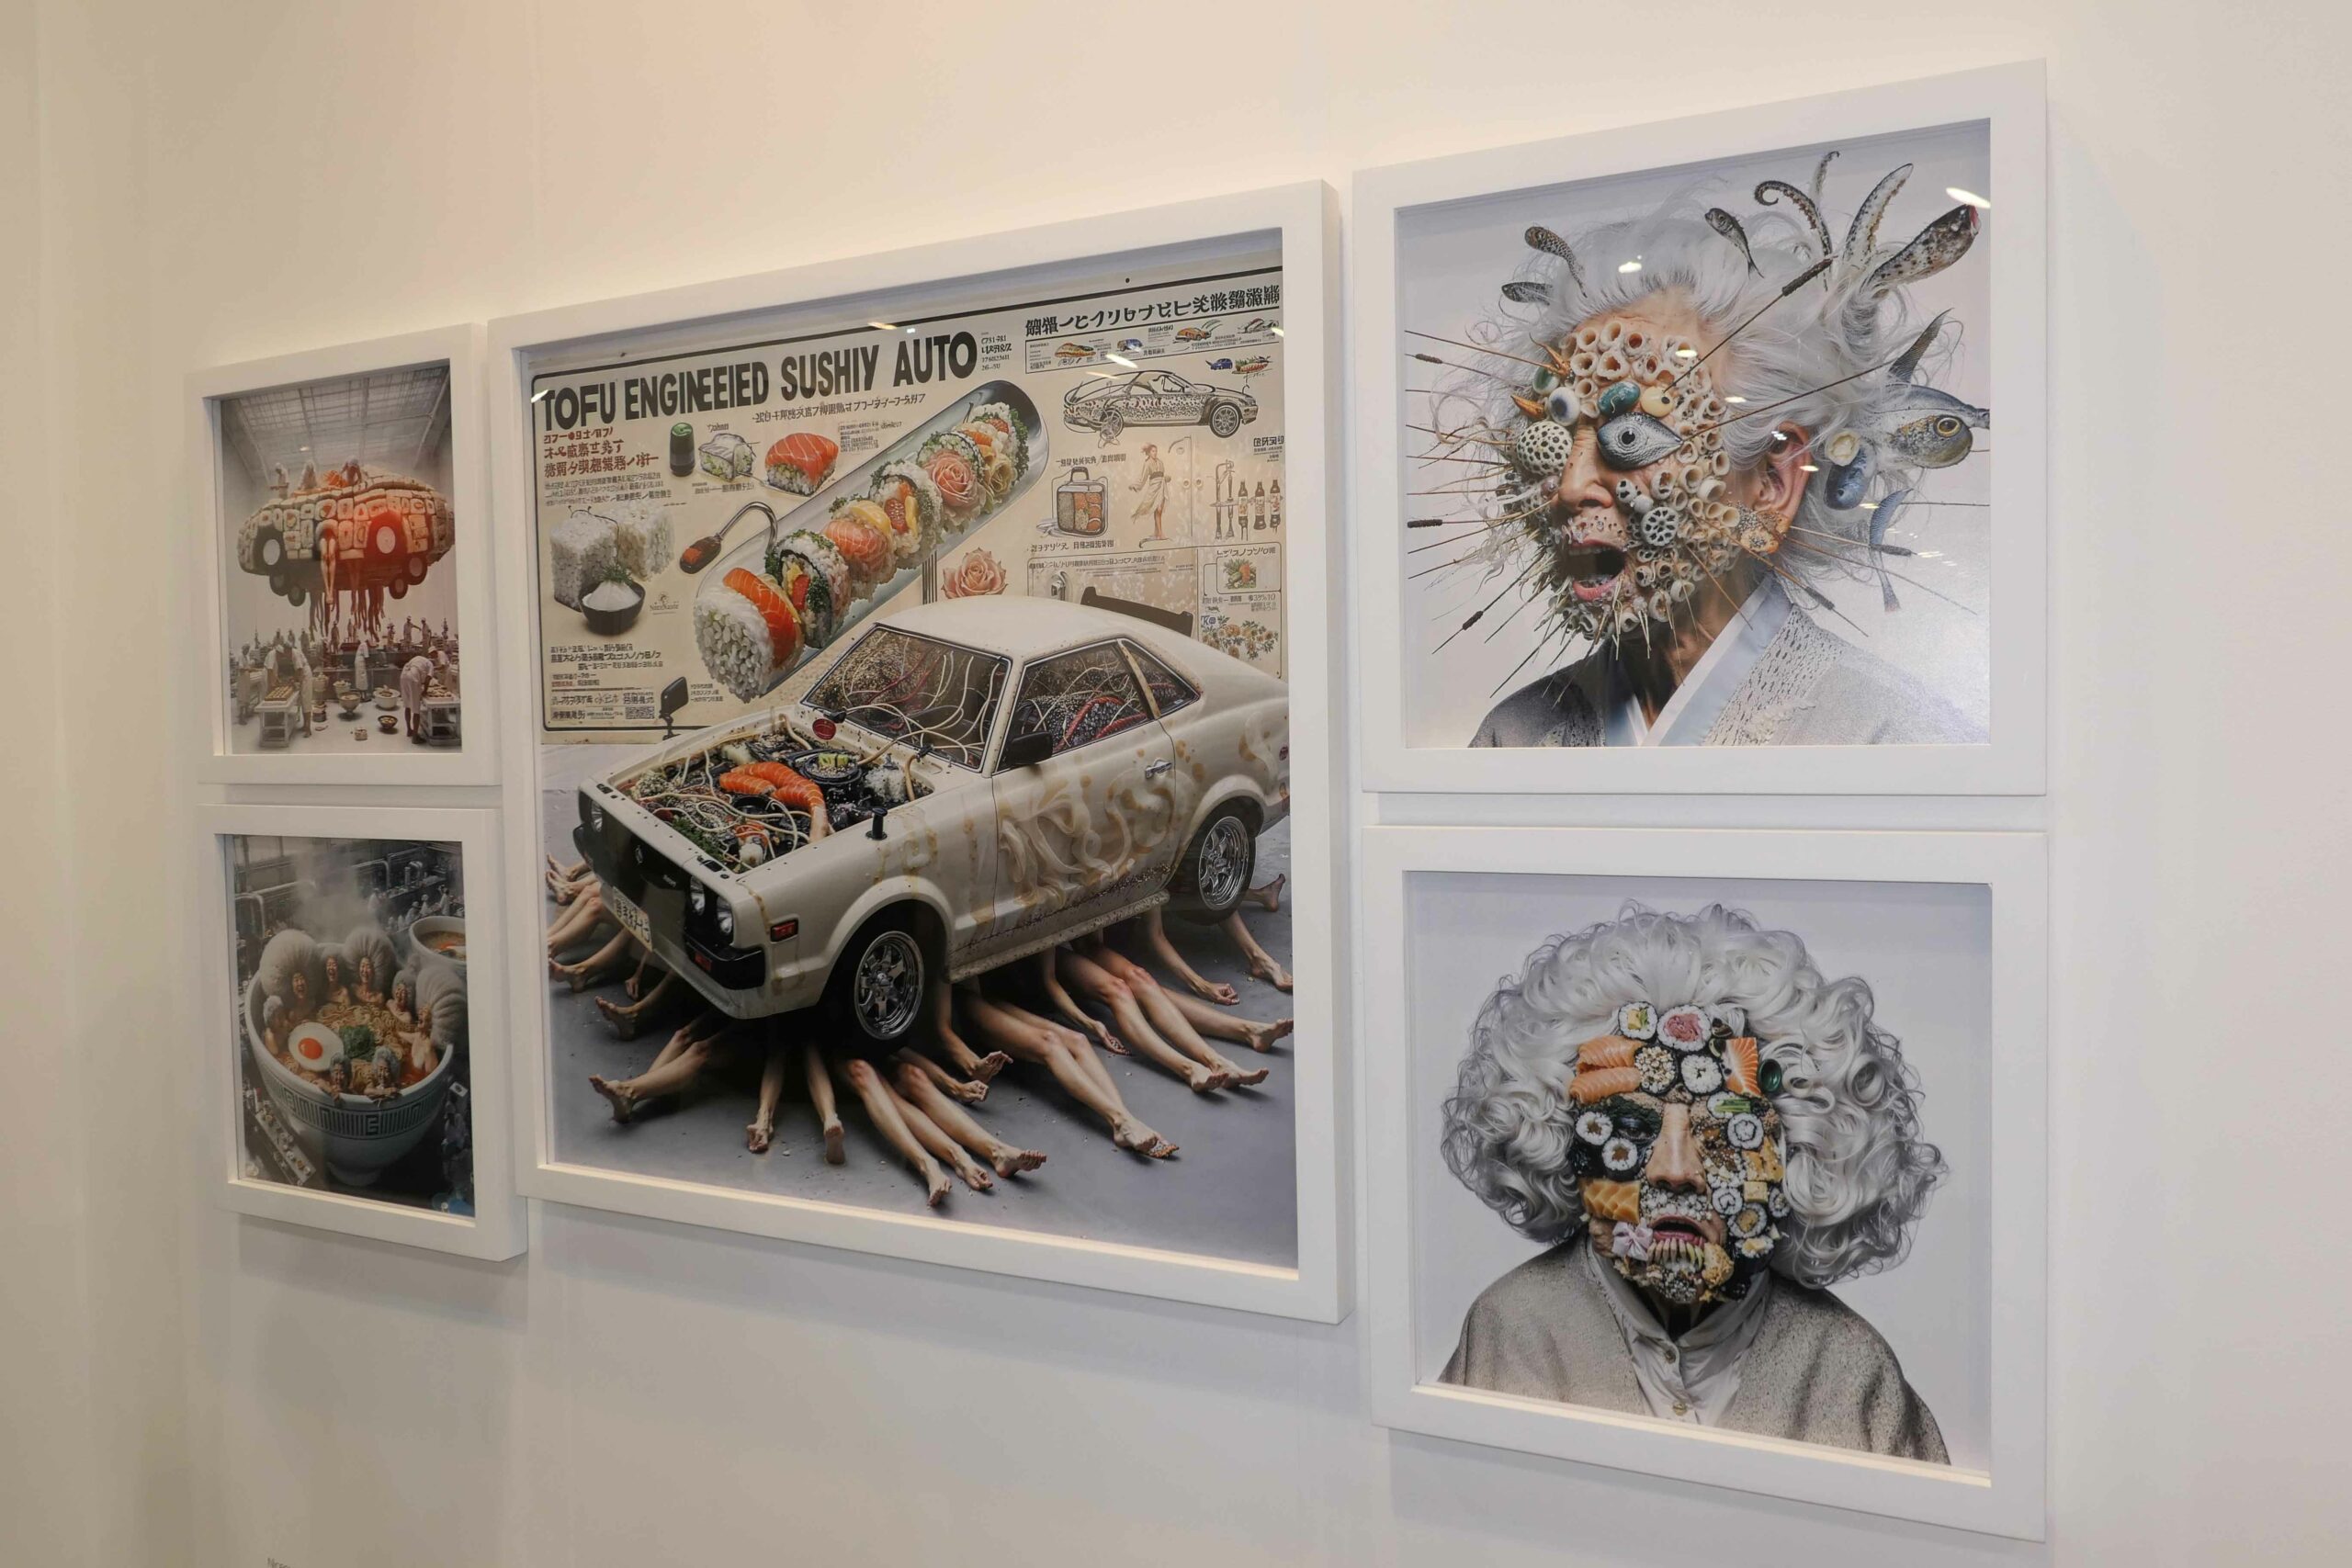 Five framed artworks of contemporary surrealism.